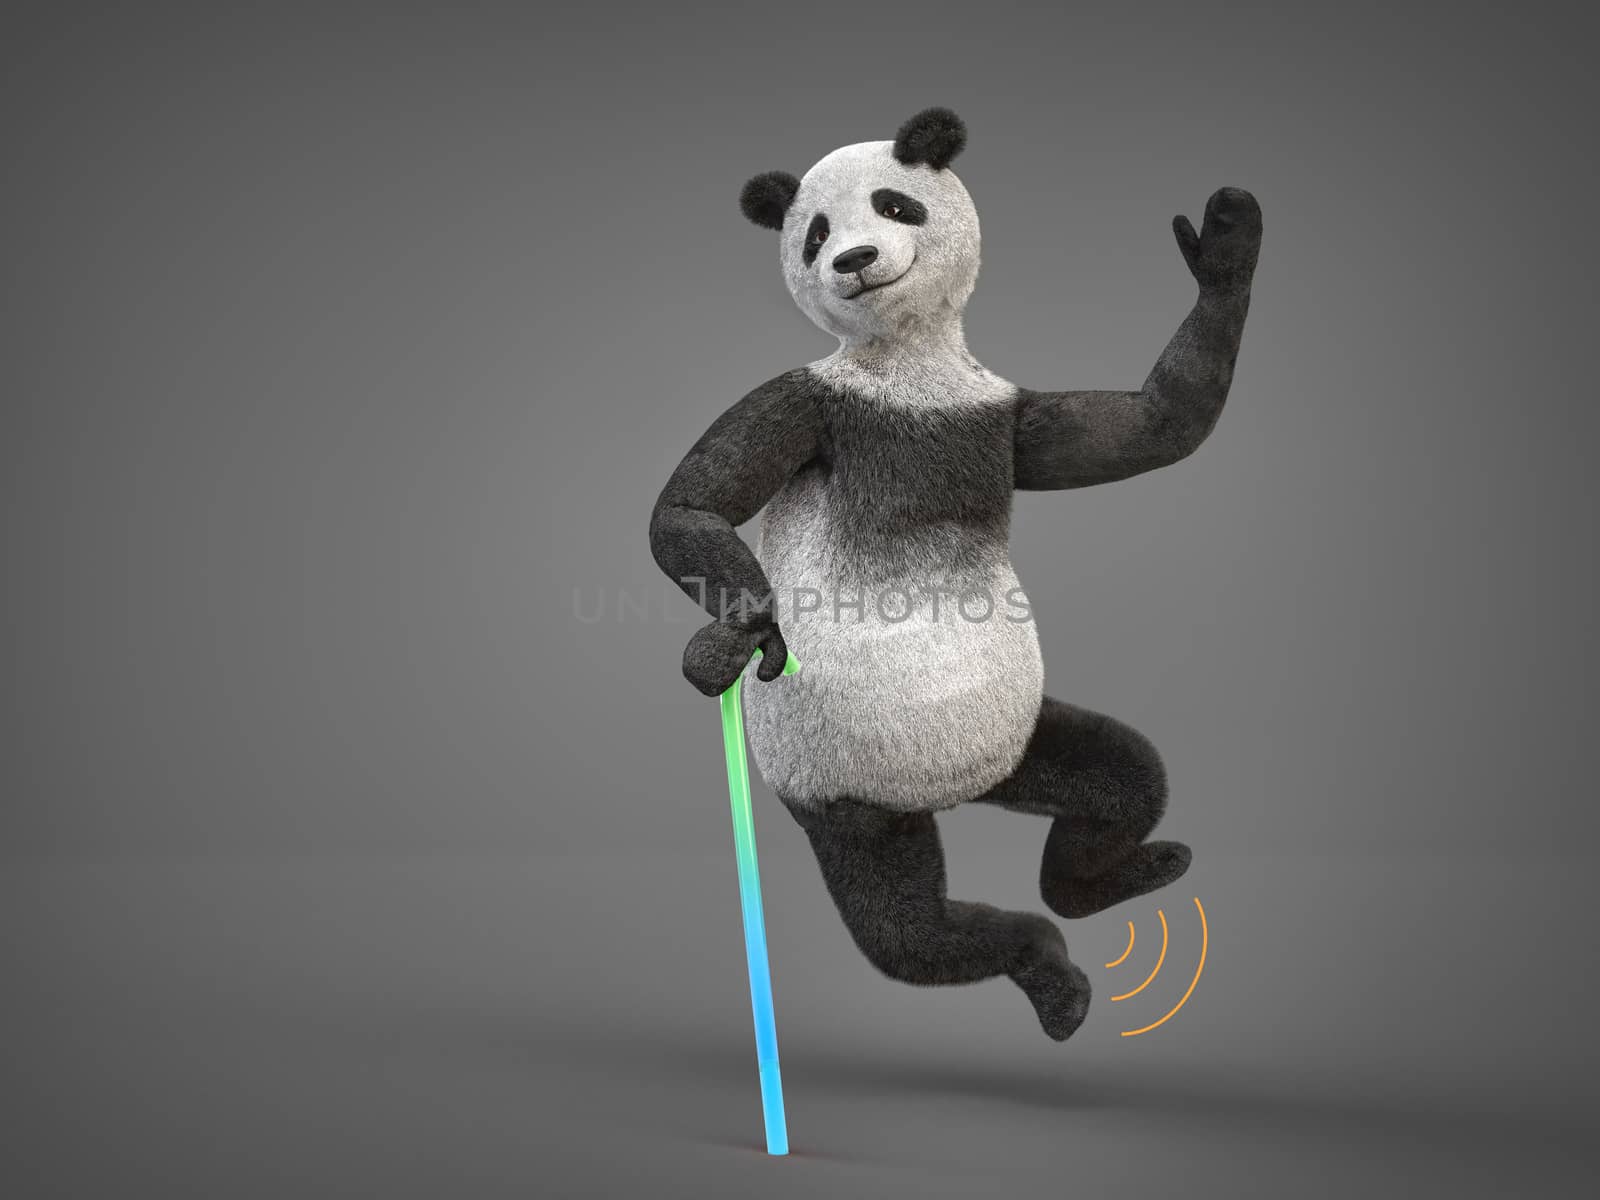 Personage character animal bear panda danicng cane by xtate